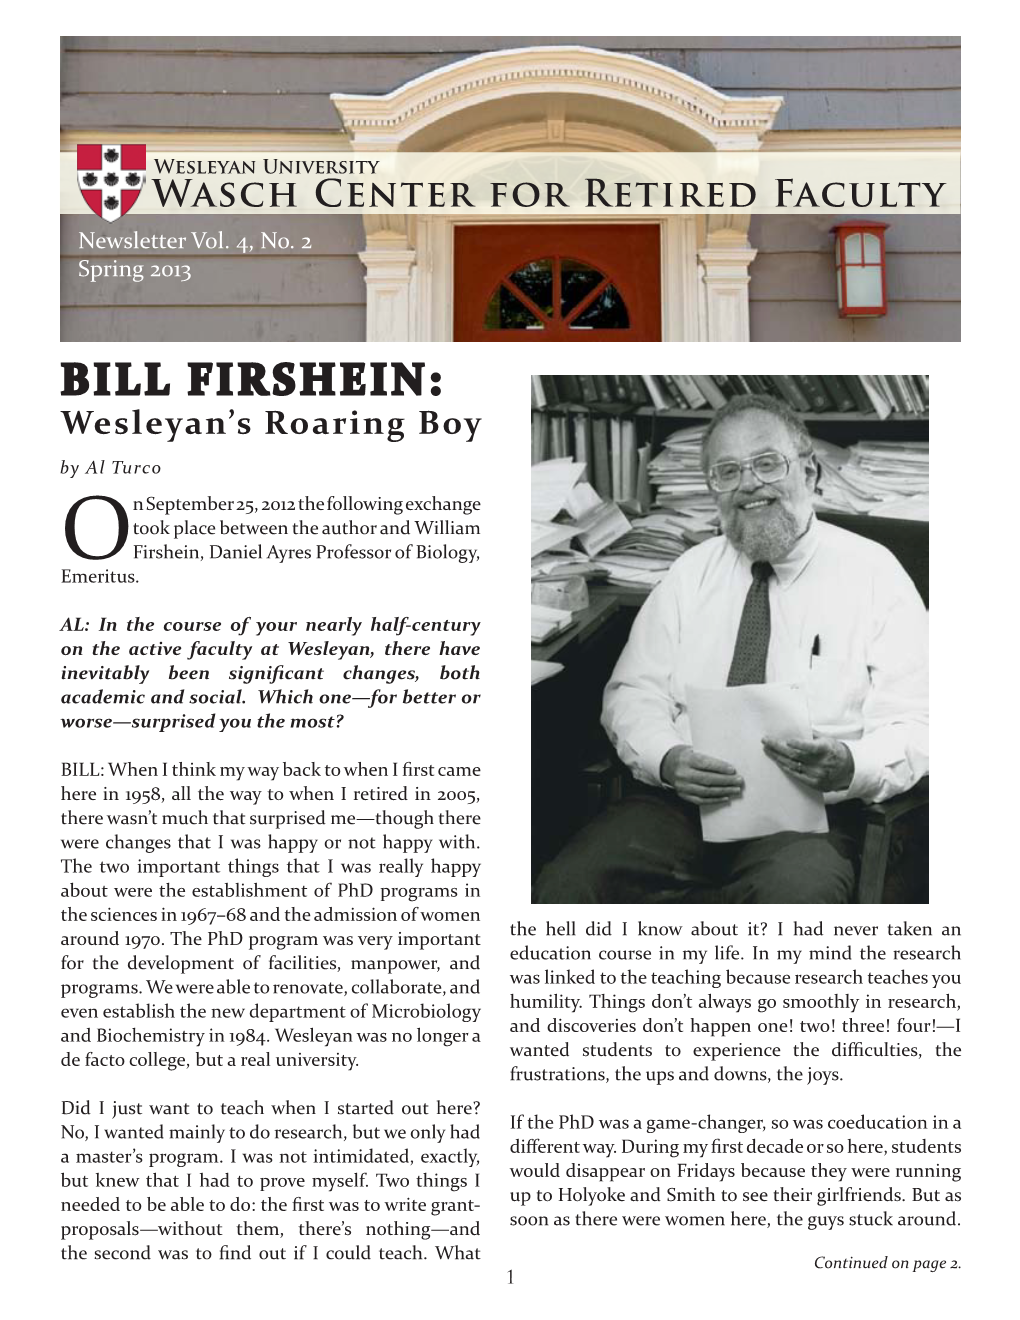 Bill Firshein